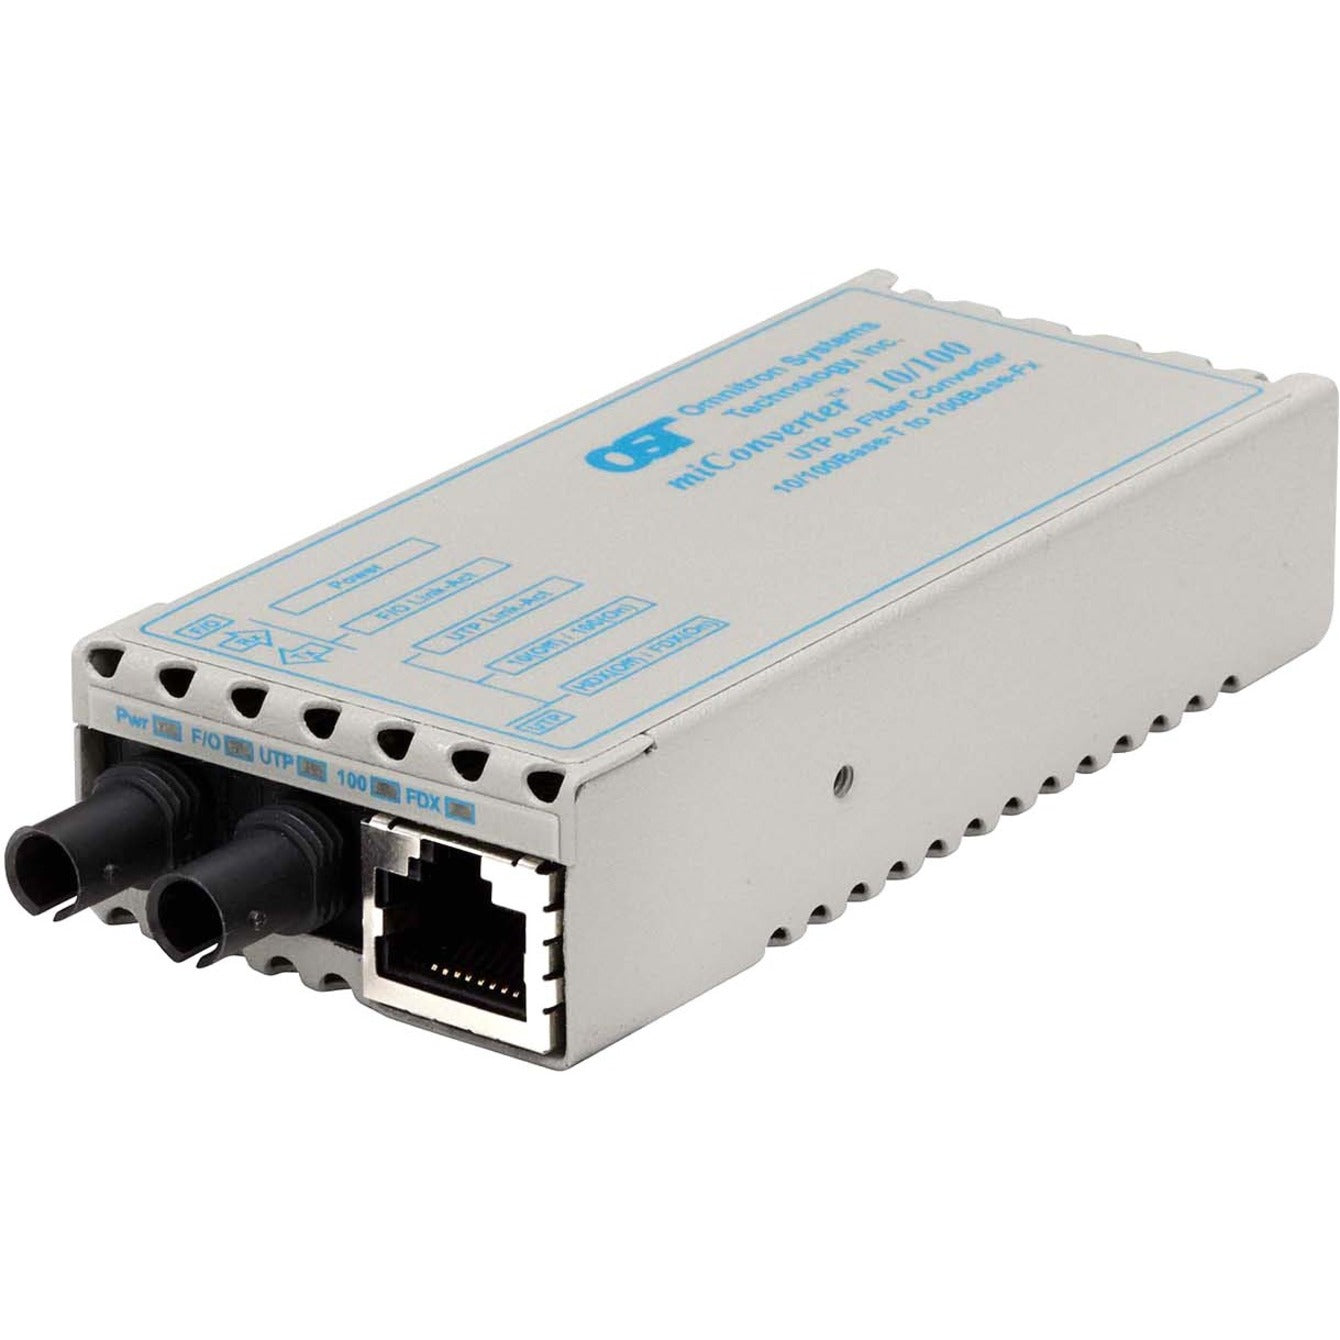 Omnitron Systems 1100-0-1 miConverter 10/100 ST Multimode 5km US AC Powered, Fast Ethernet Media Converter